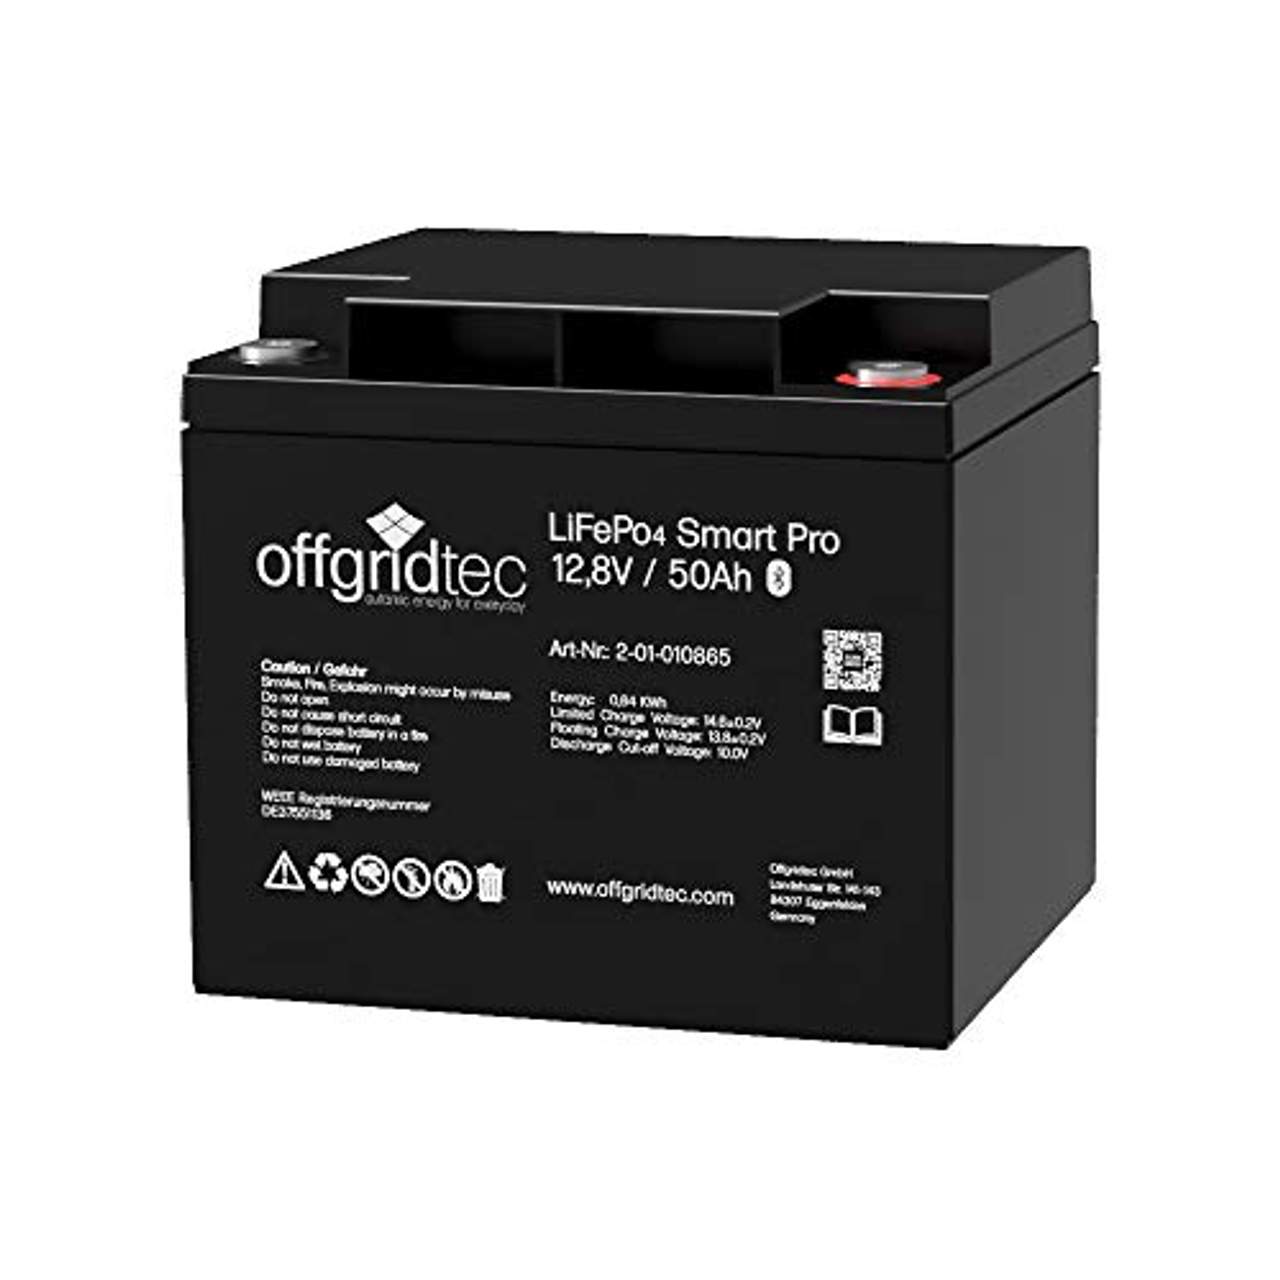 Offgridtec LiFePo4 Batterie 12/50 12,8V 50Ah 640Wh BMS integriert